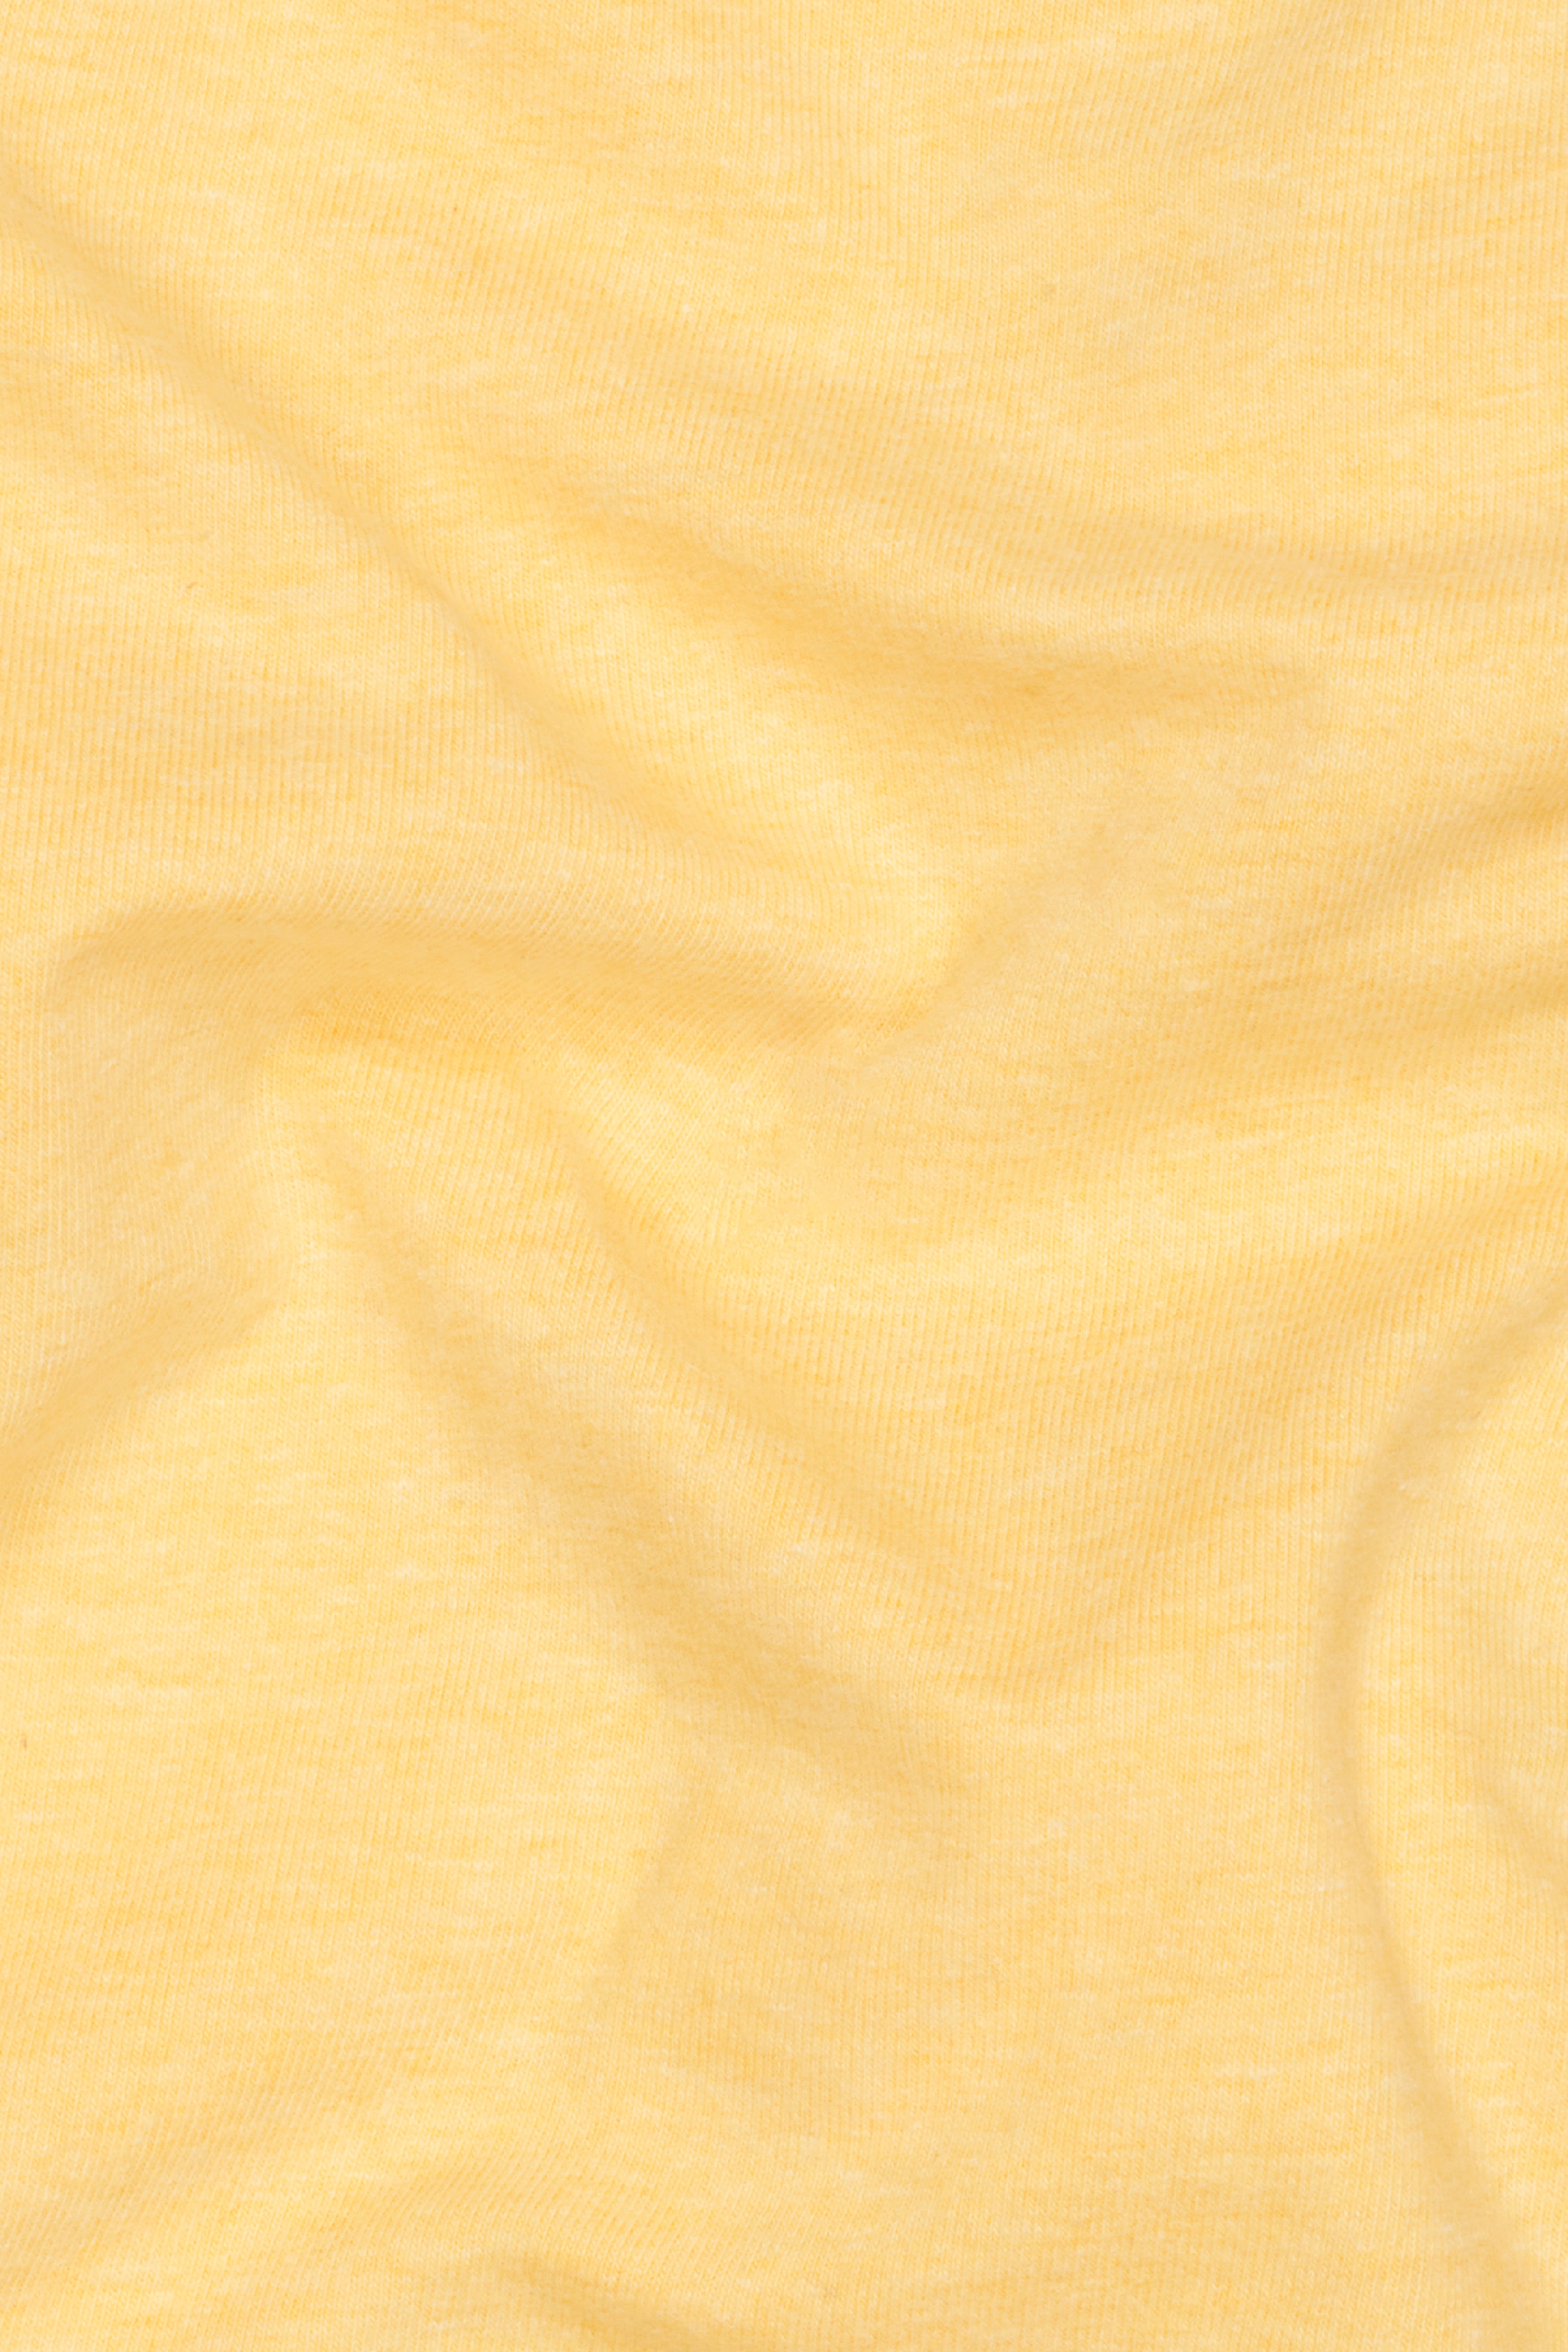 Marzipan Yellow Premium Cotton Jersey T-Shirt TS901-S, TS901-M, TS901-L, TS901-XL, TS901-XXL